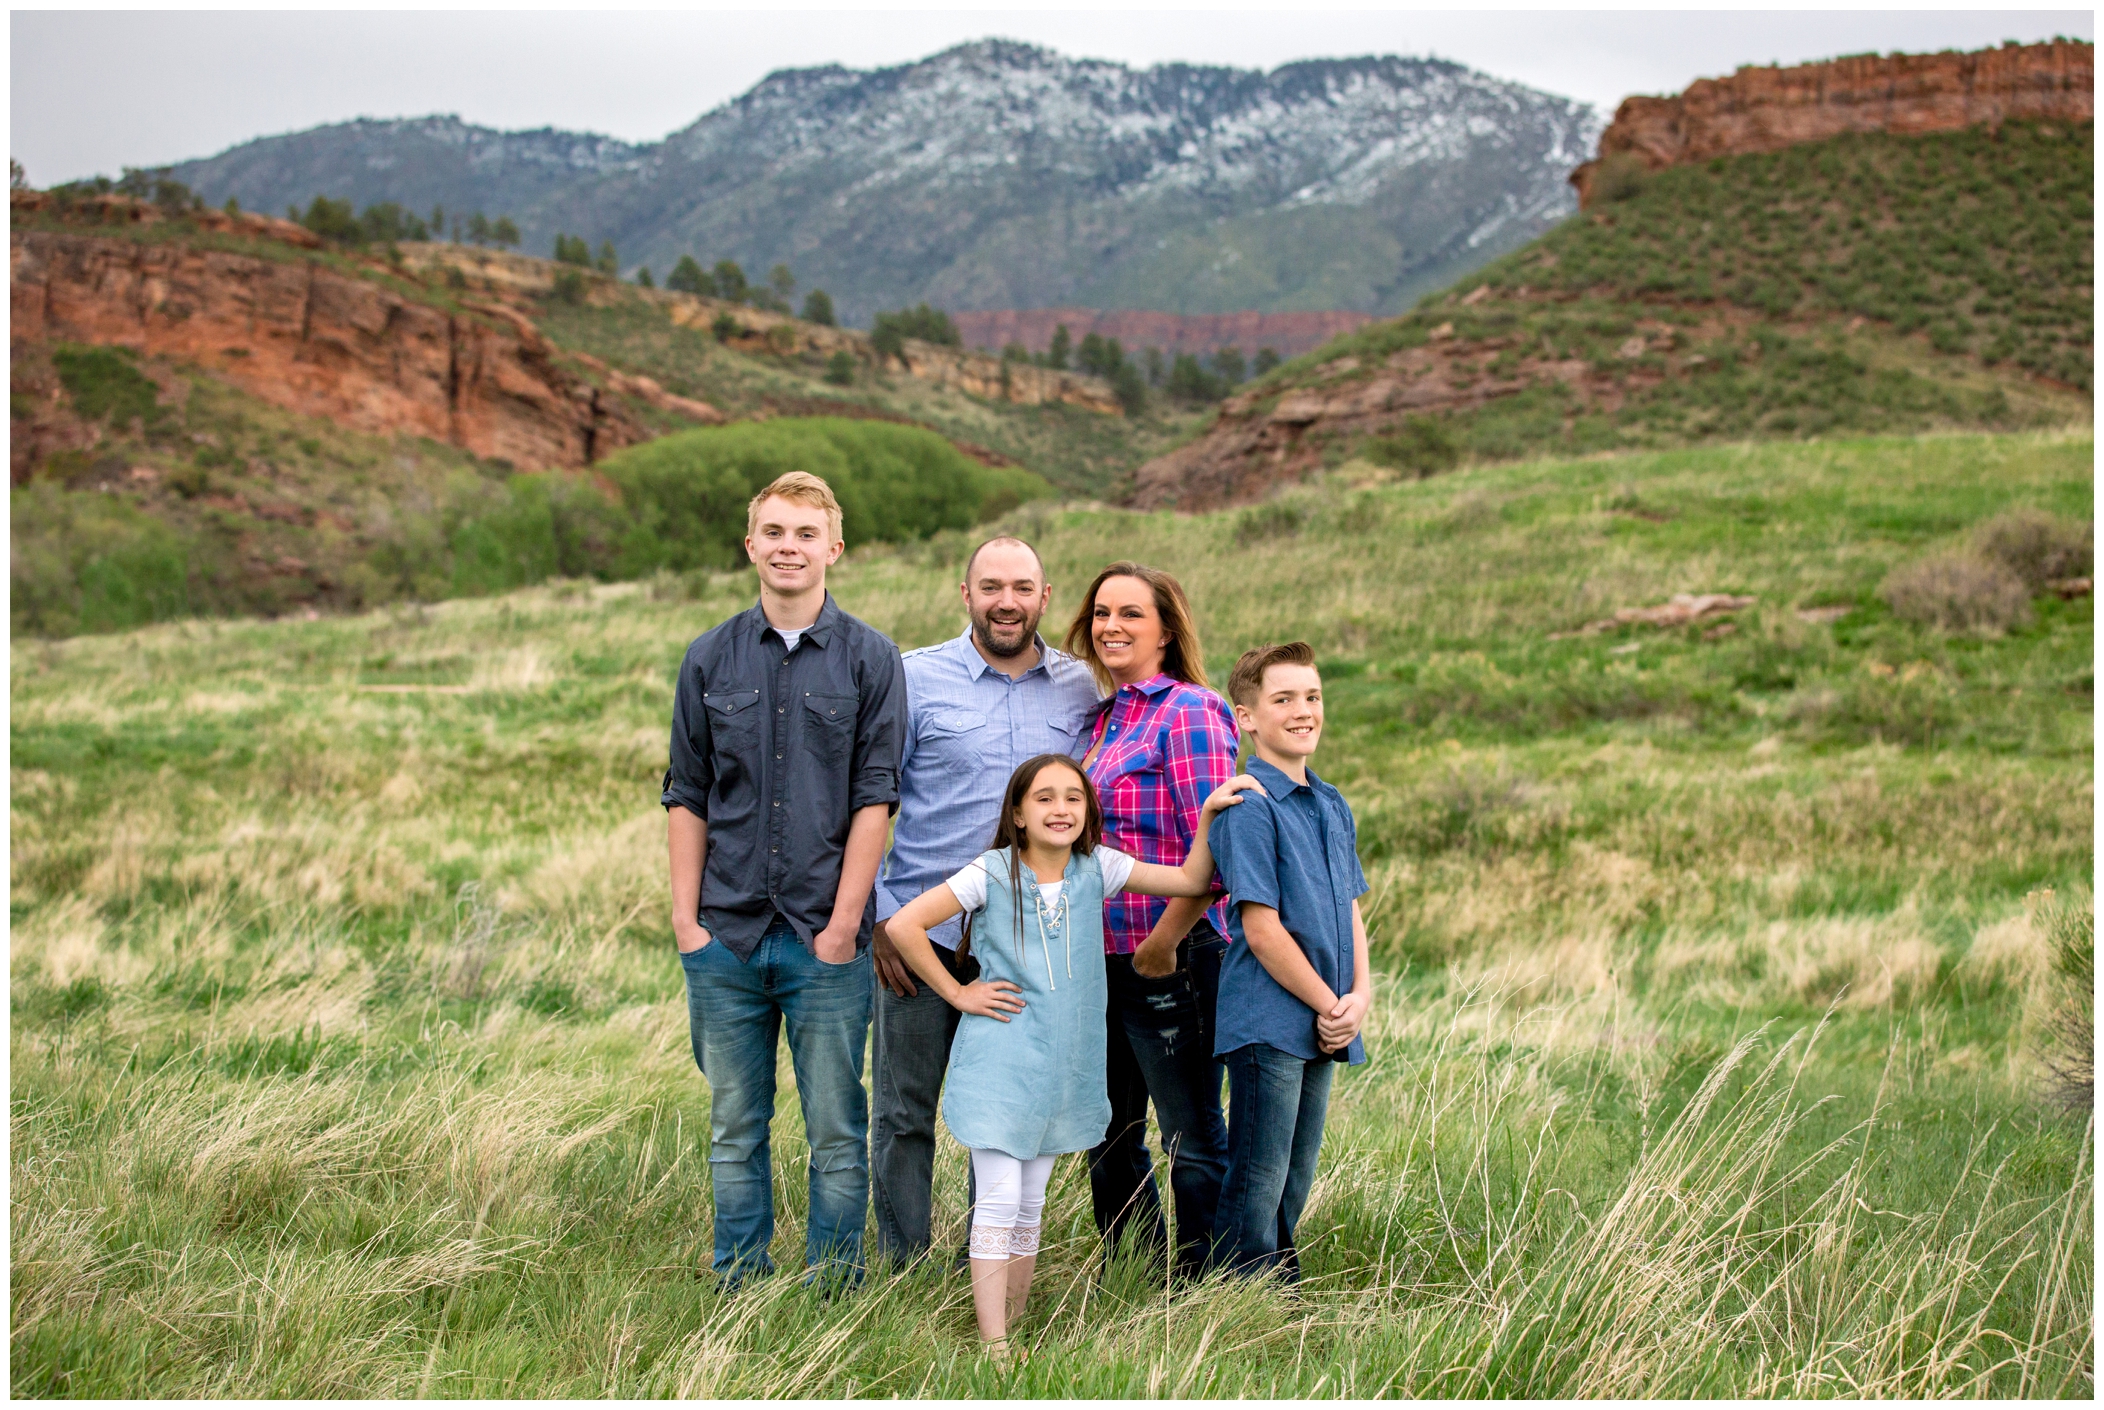 Loveland Colorado family photos at Bobcat Ridge Natural Area by Plum Pretty Photography